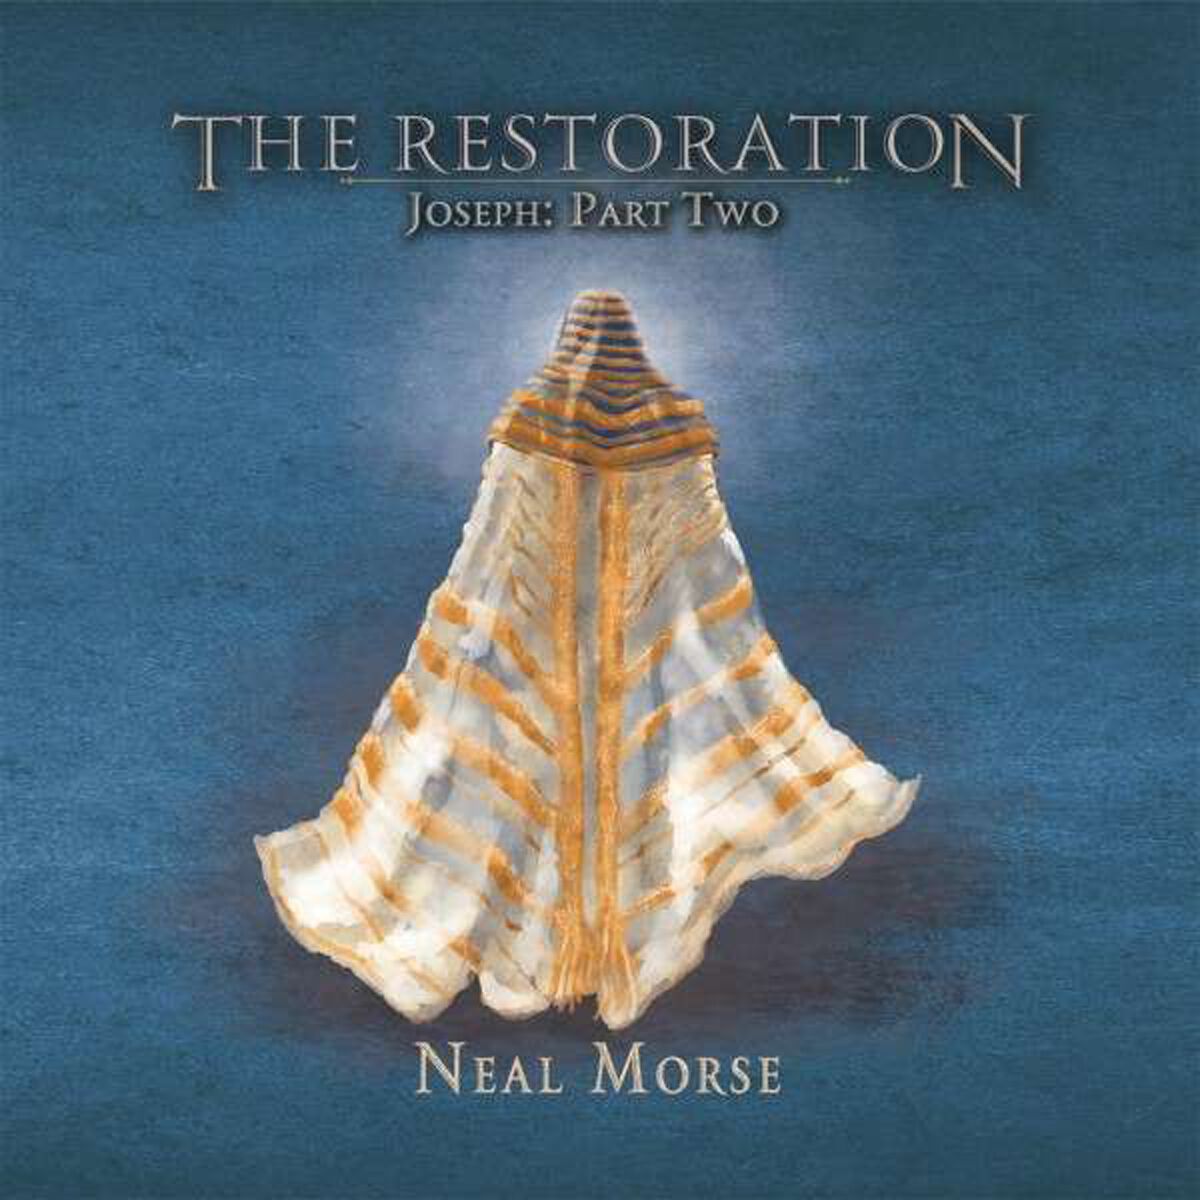 The restoration - Joseph: Part two von Neal Morse - CD (Jewelcase)